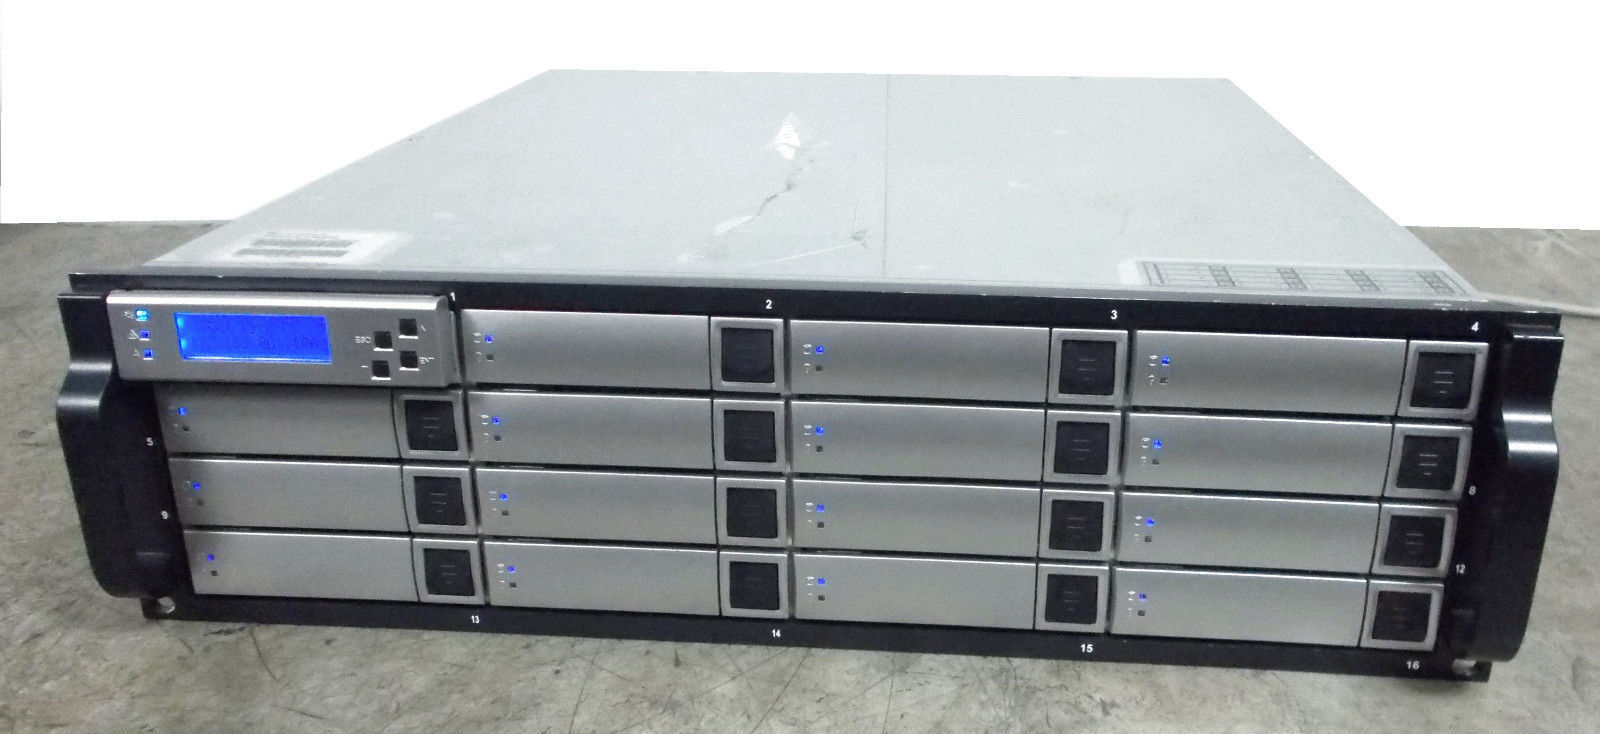 G-Technology G-Speed XL16 Raid Array Storage Unit.